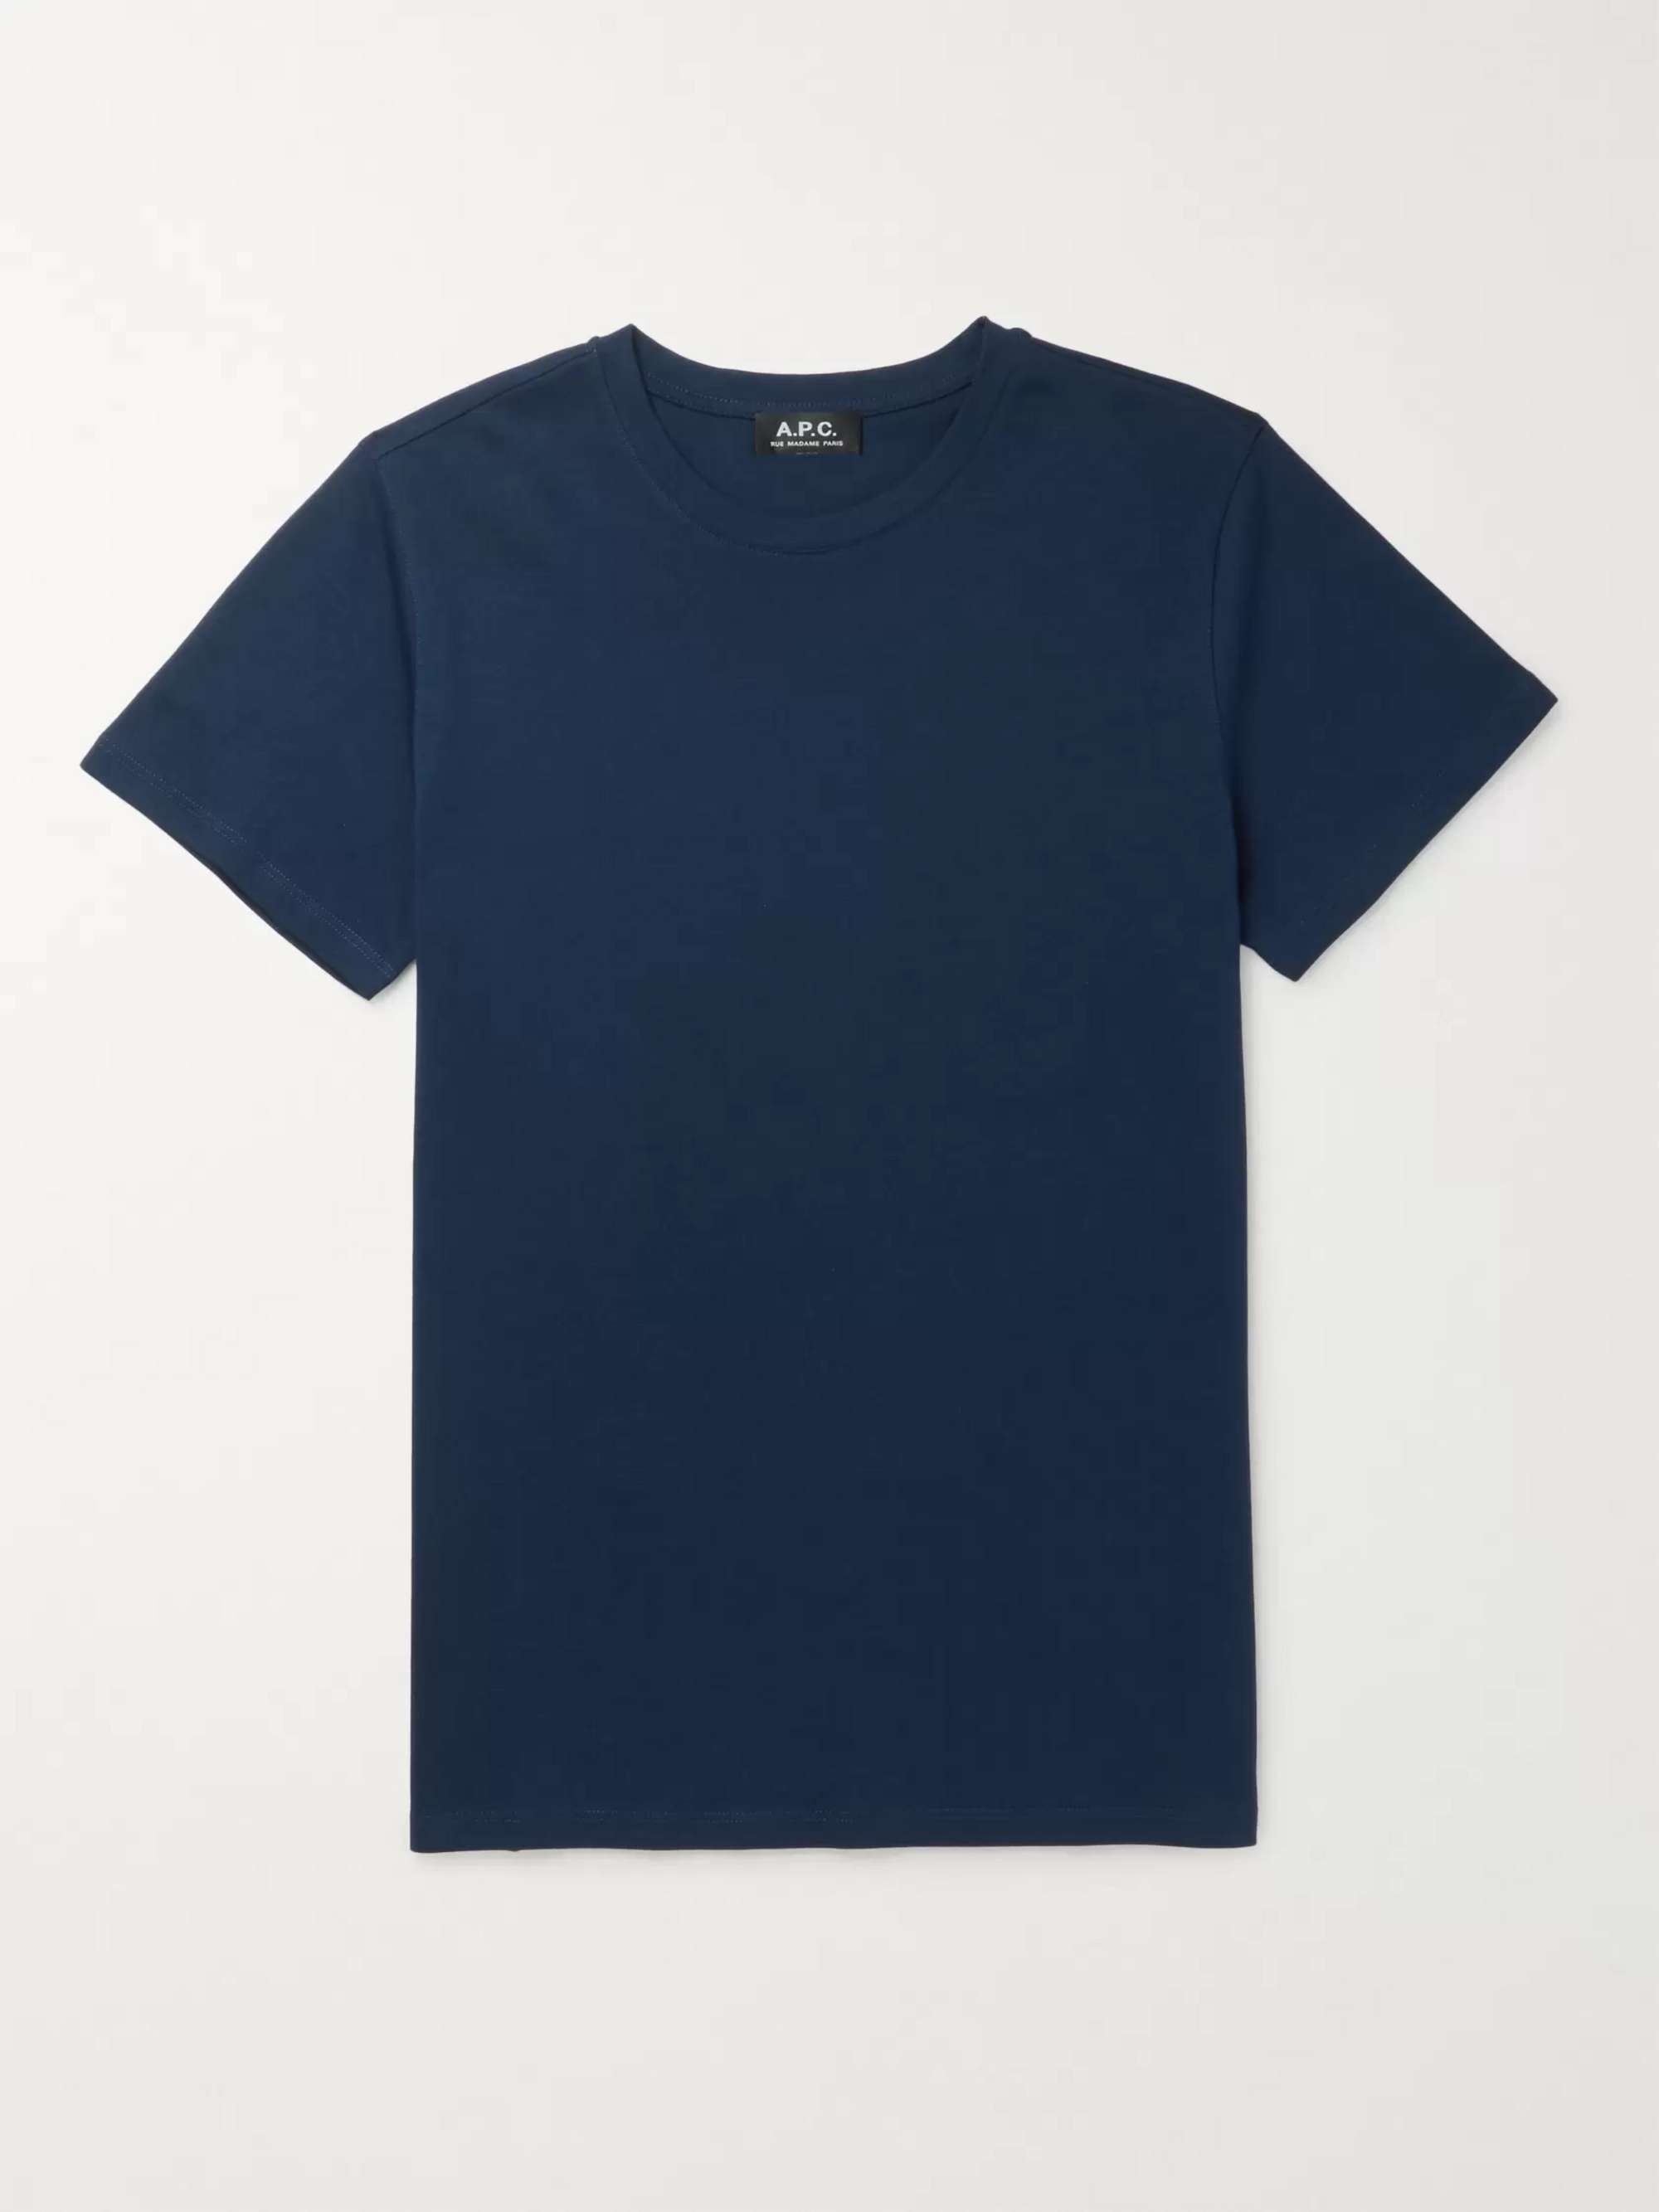 Sky blue Silk and Cotton-Blend T-Shirt | TOM FORD | MR PORTER